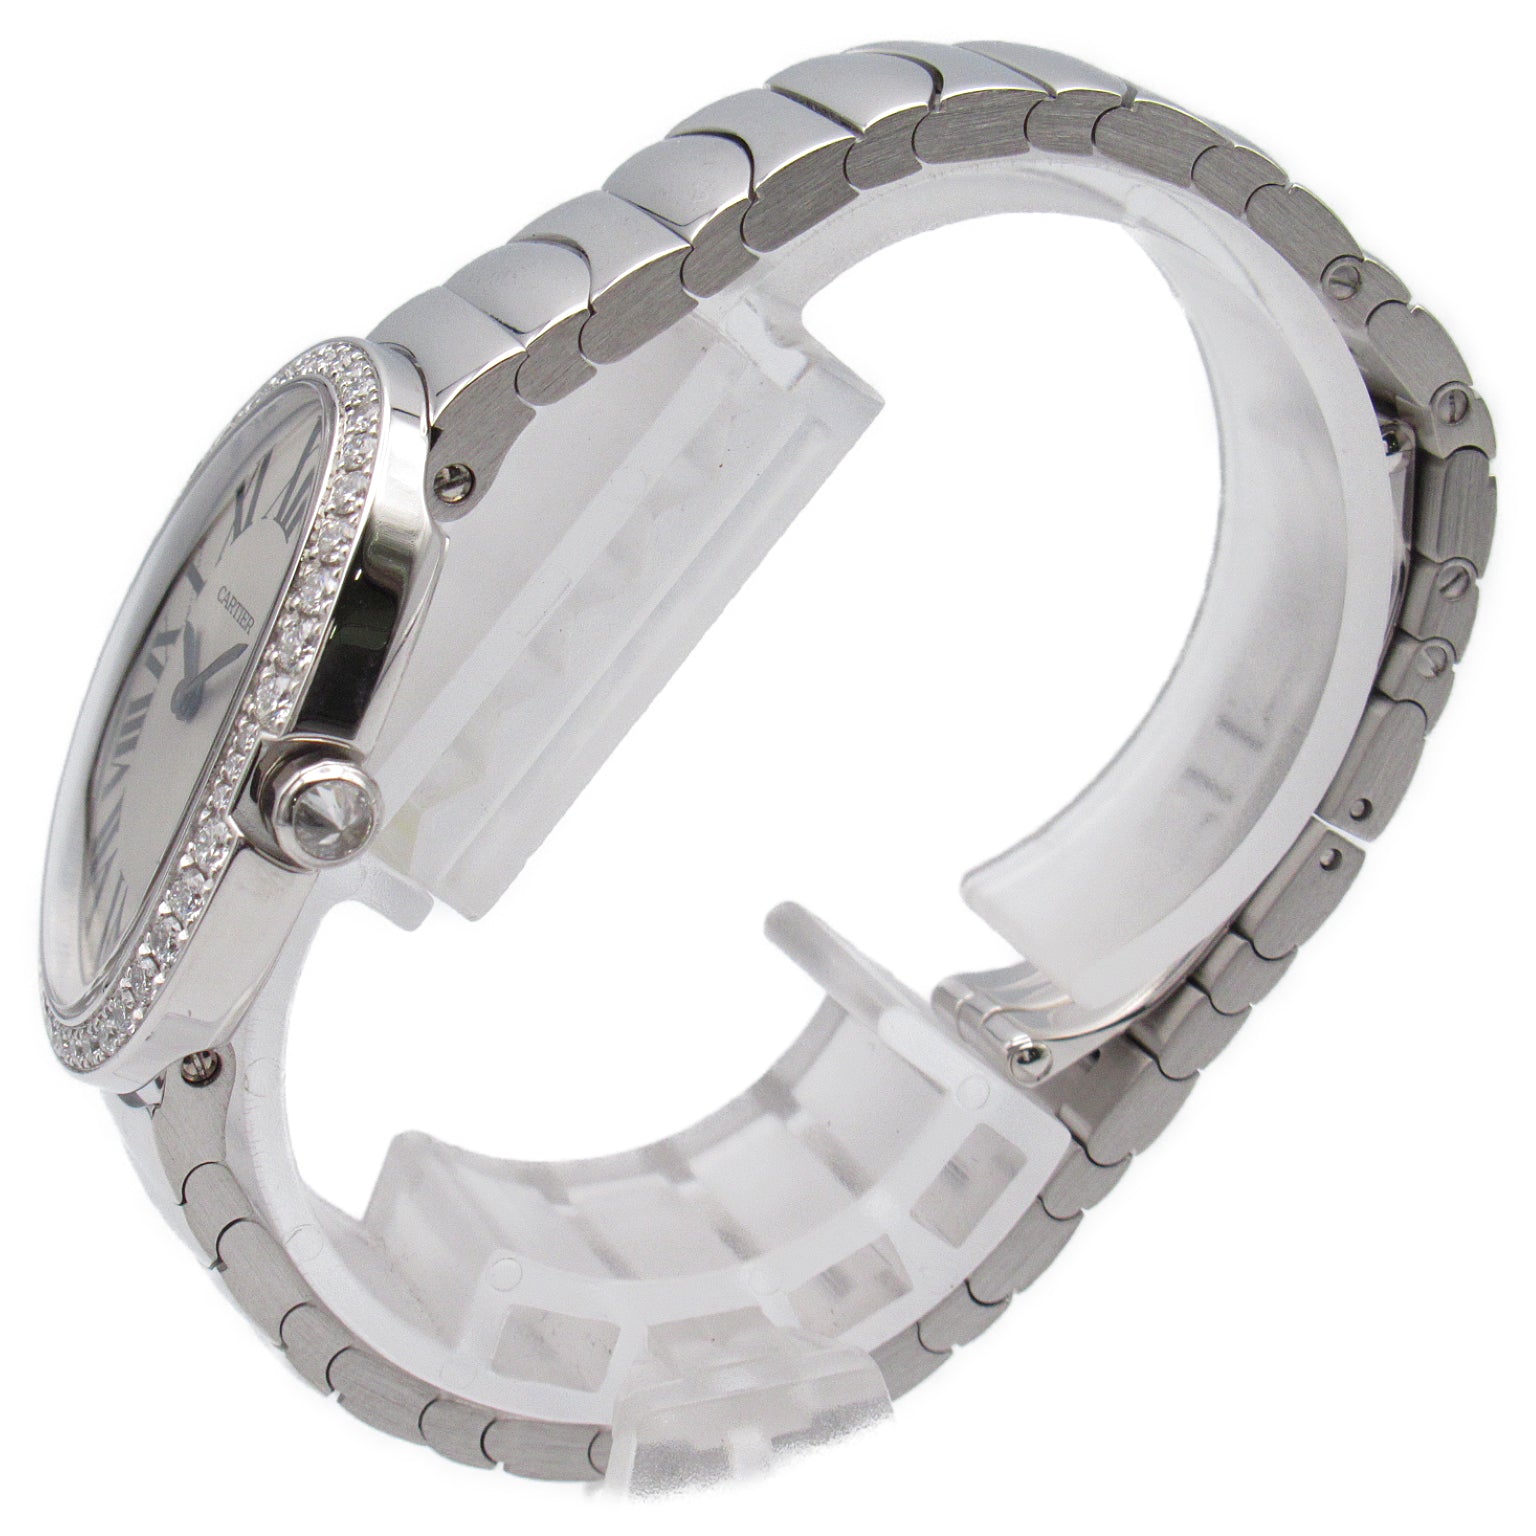 Cartier Benuvar SM Diamond-Bezel Watch K18WG (White G) WB520006 WB520006 WB520006